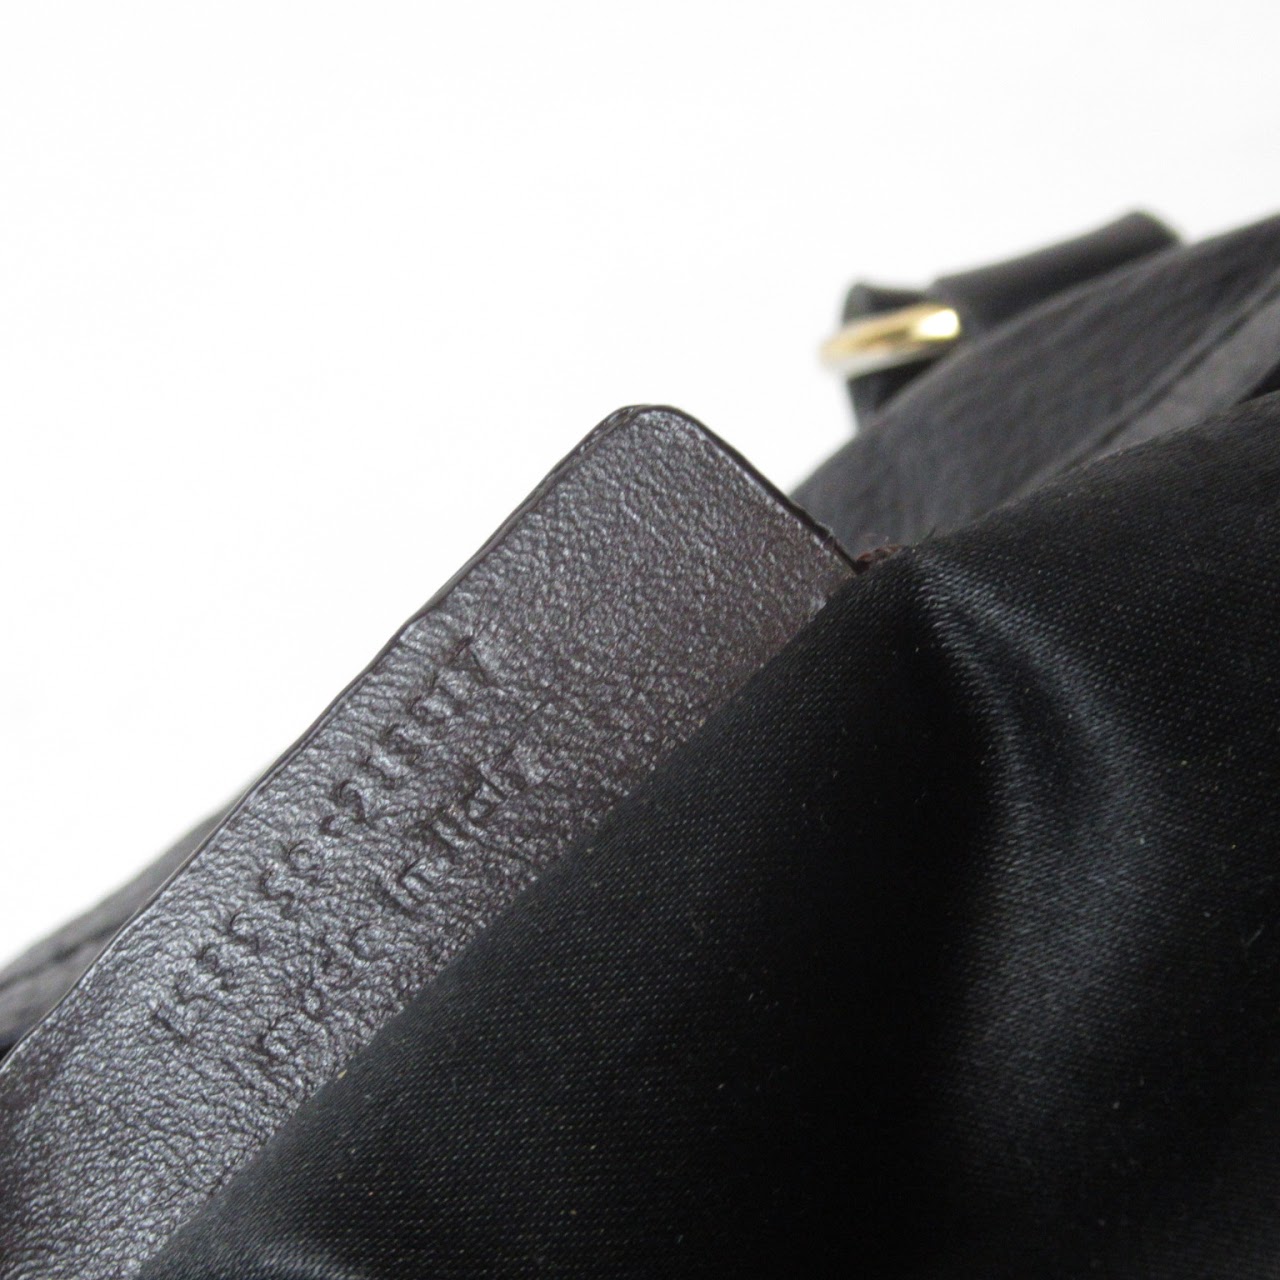 Yves Saint Laurent Black Muse Handbag